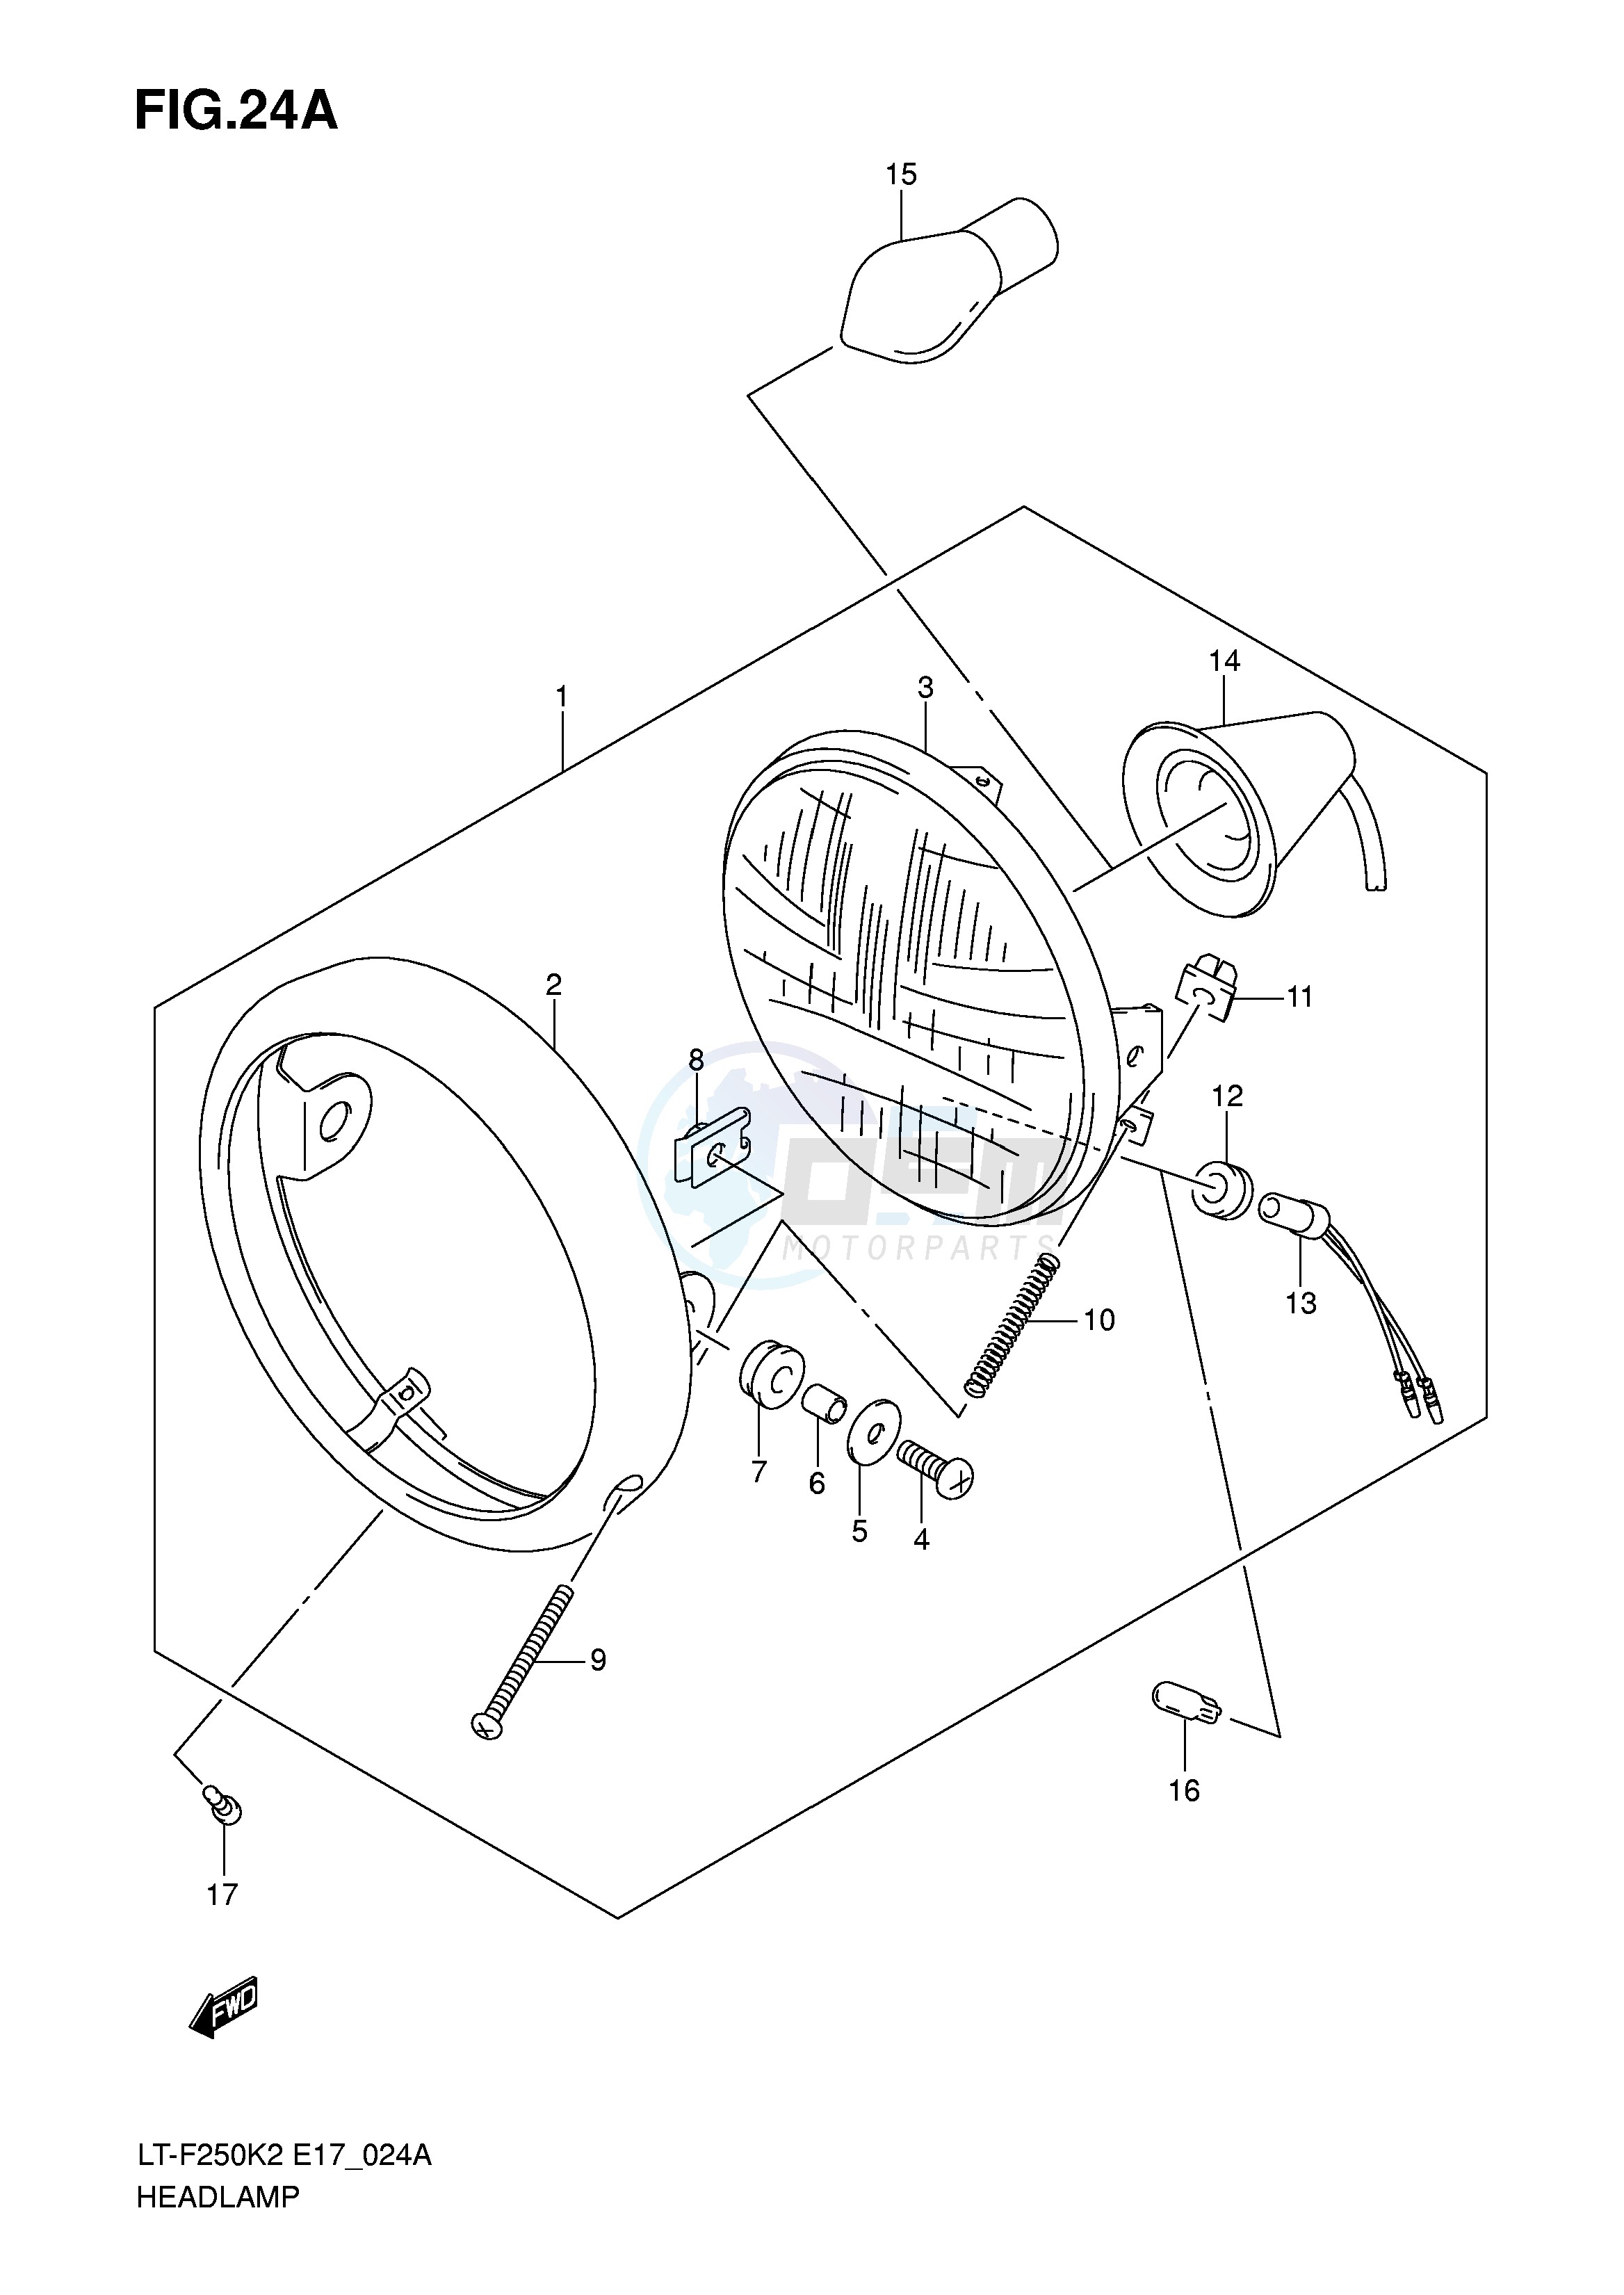 HEADLAMP (LT-F250K6 E4) blueprint